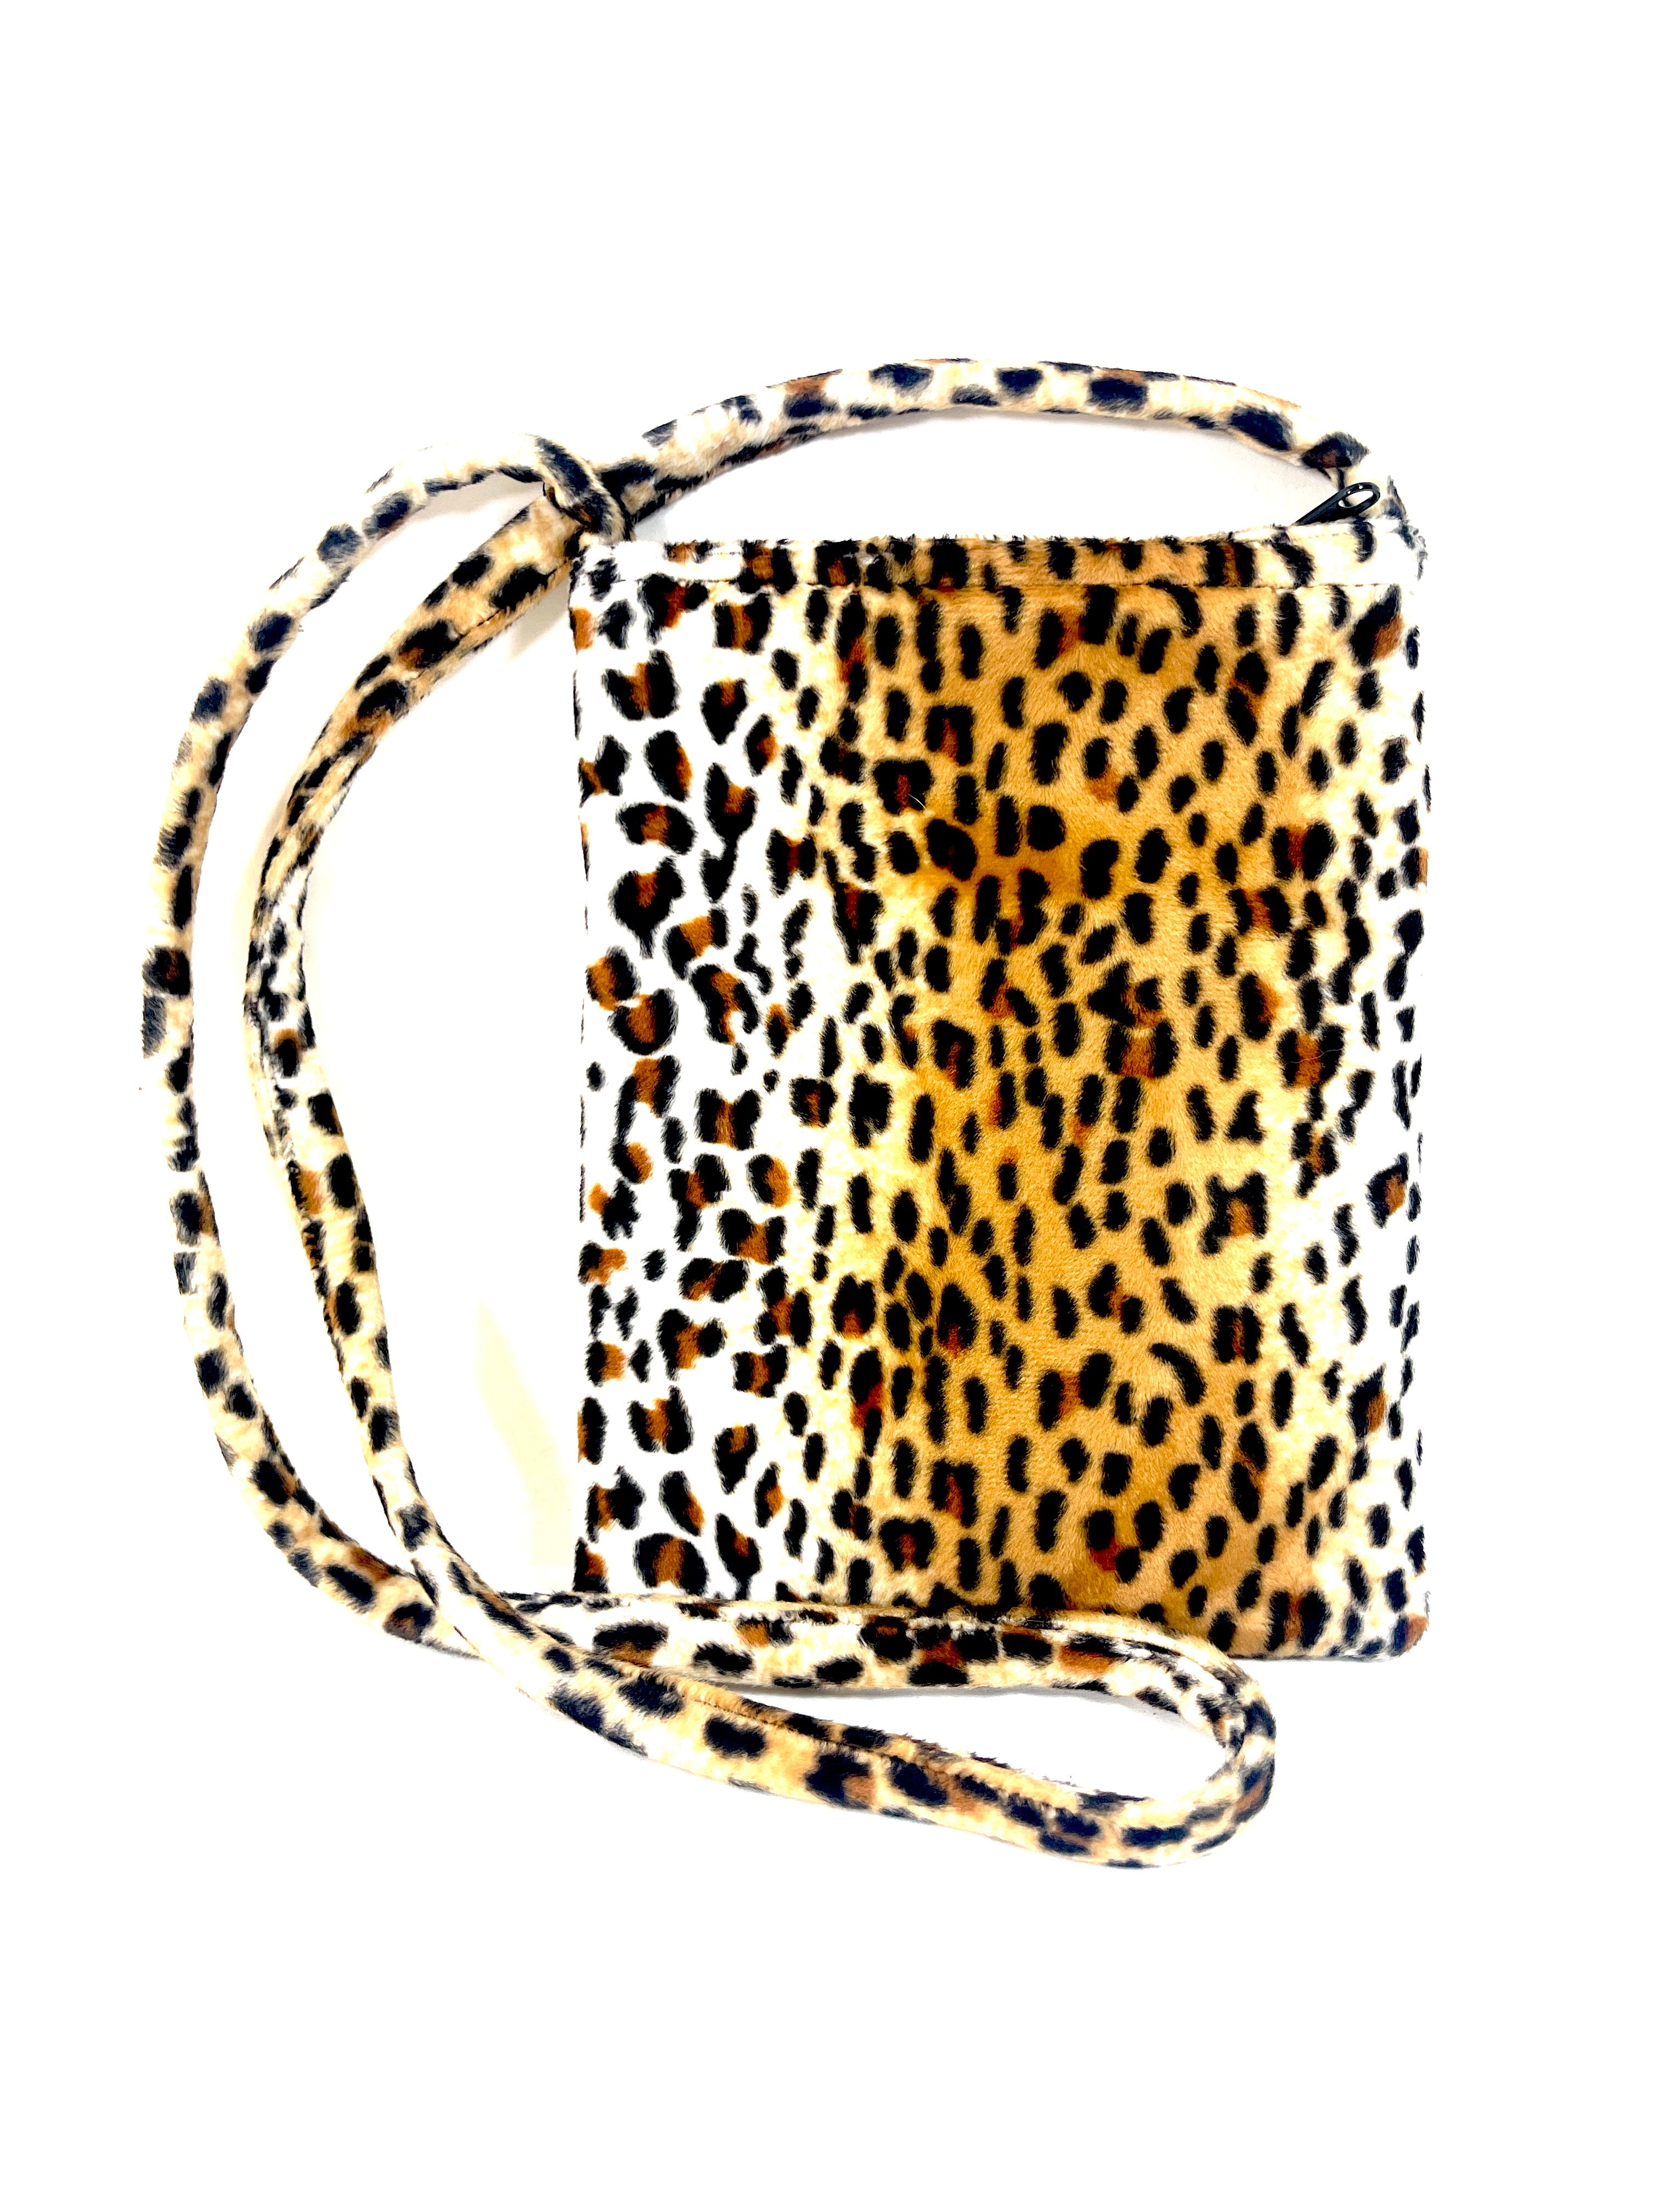 Patch Purse in Leopard Faux Fur